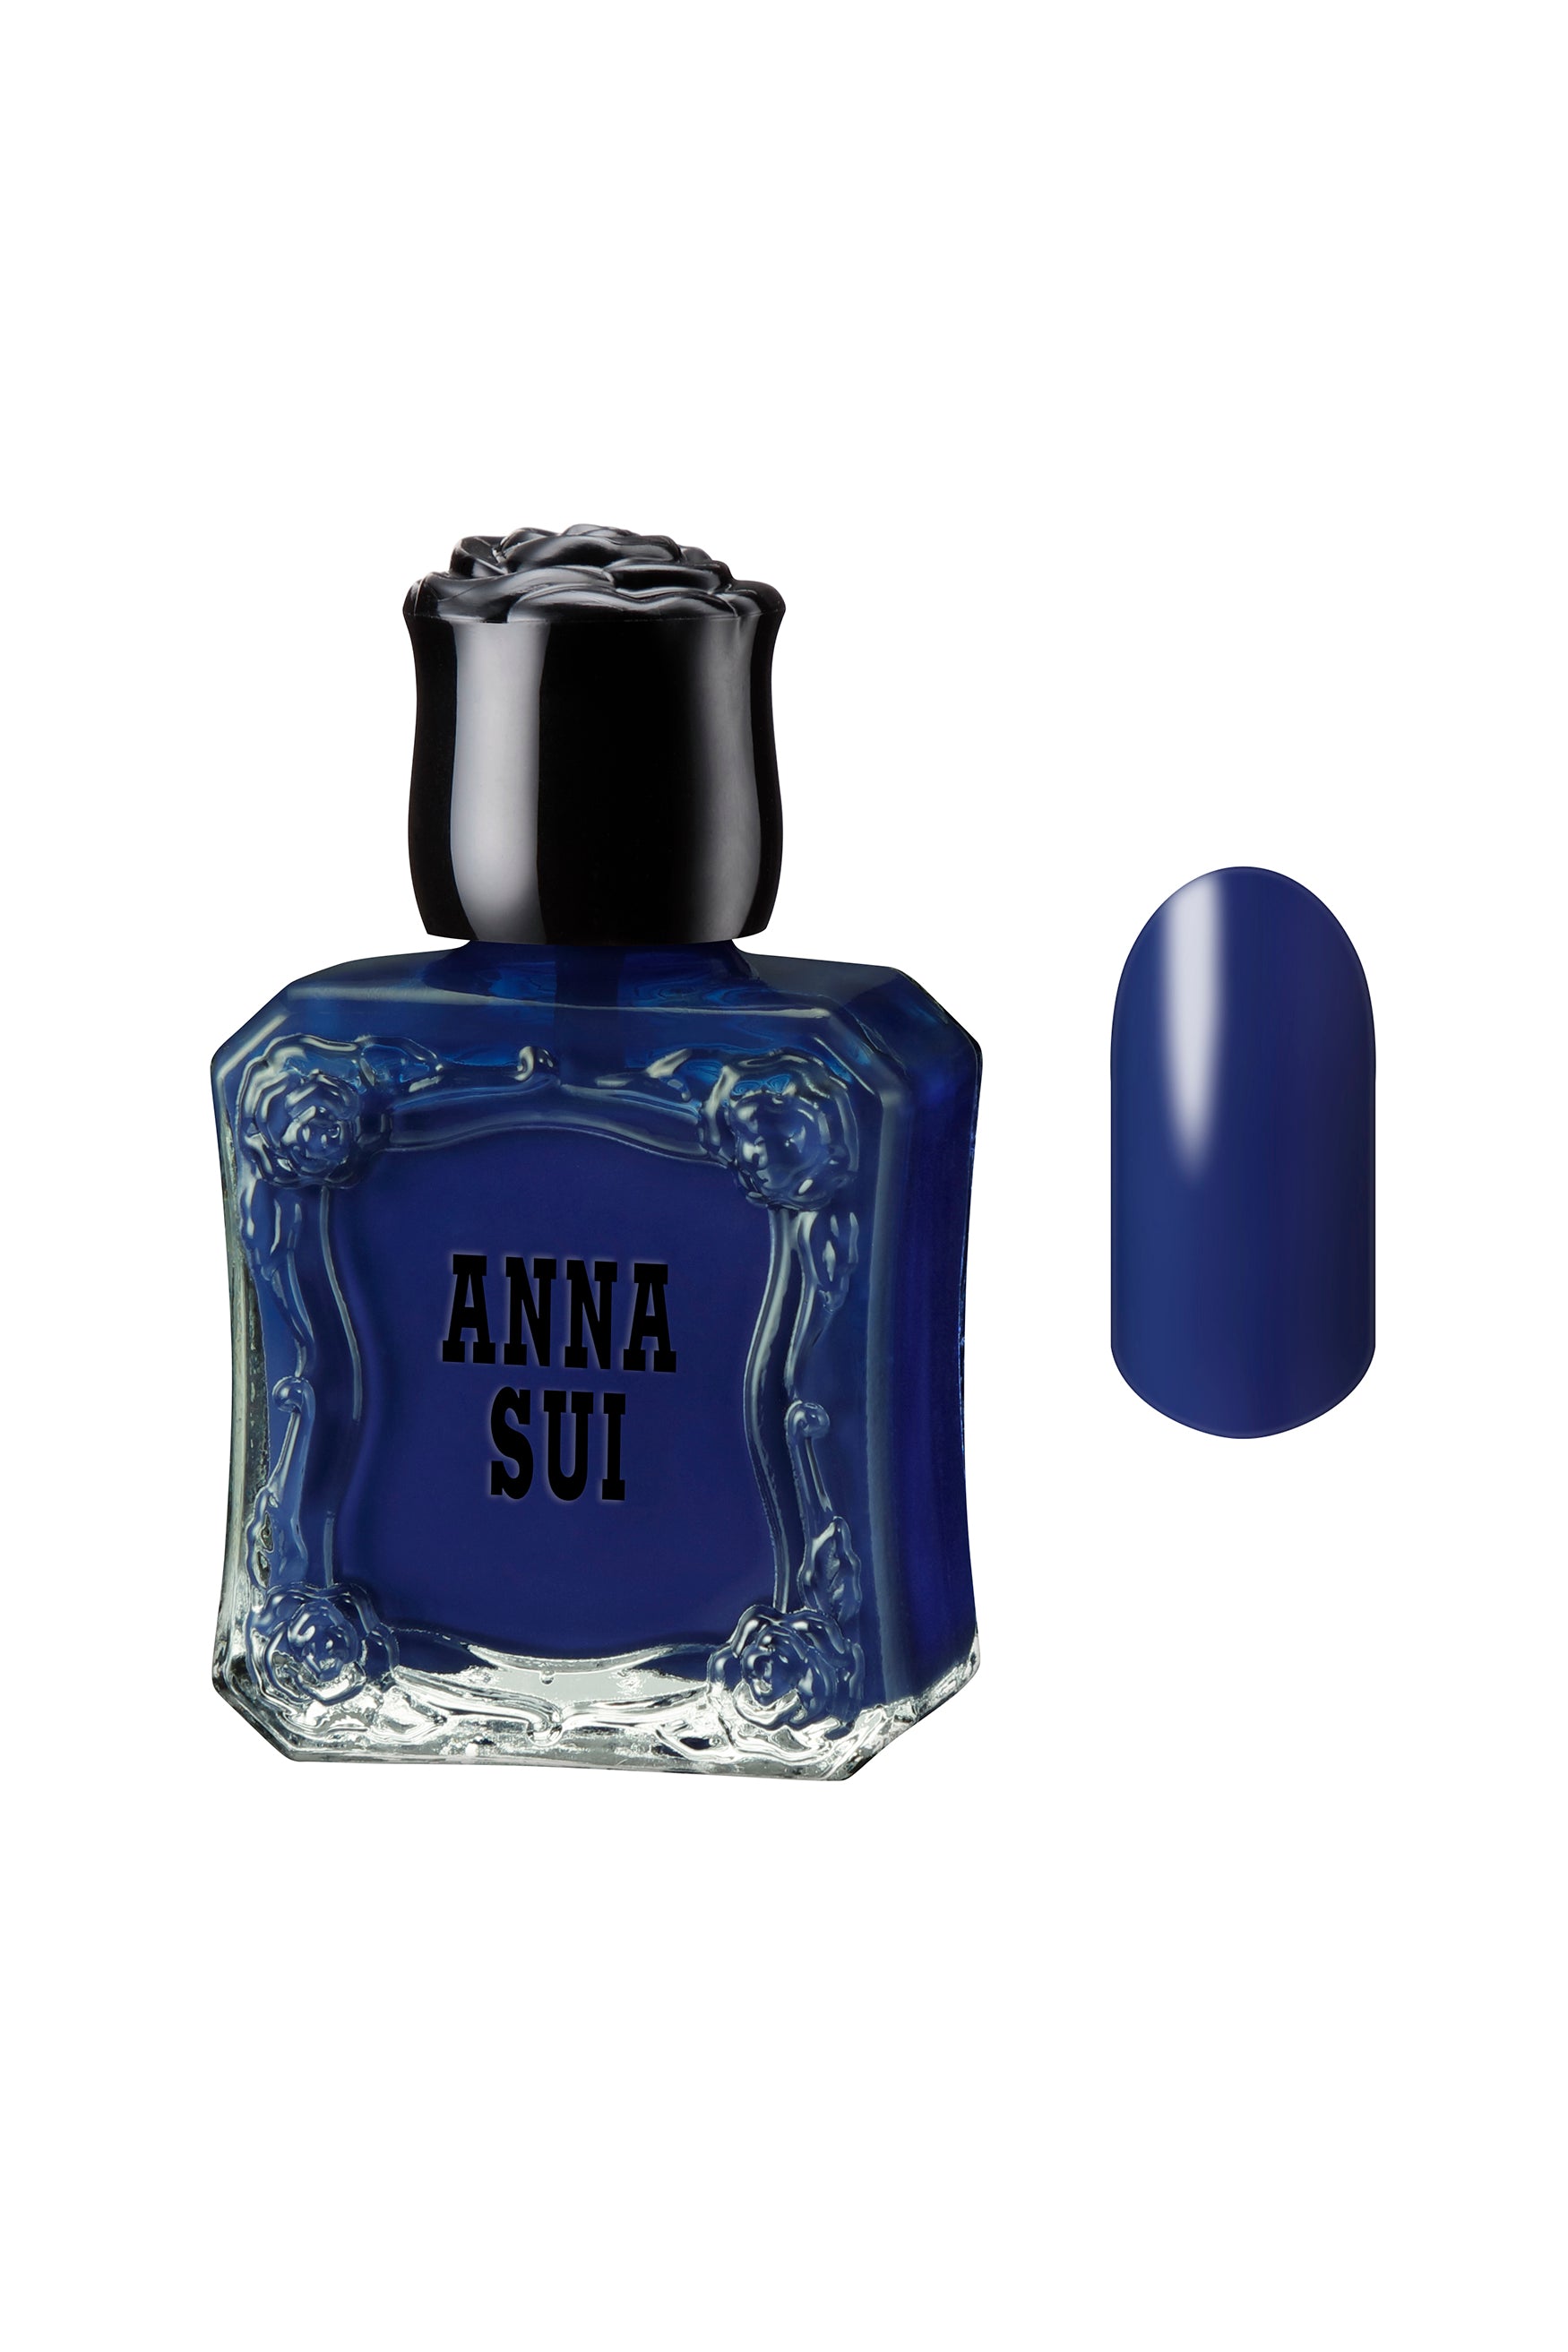 ROYAL BLUE: Glass bottle, black cap rose shape, with Anna Sui floral design and label